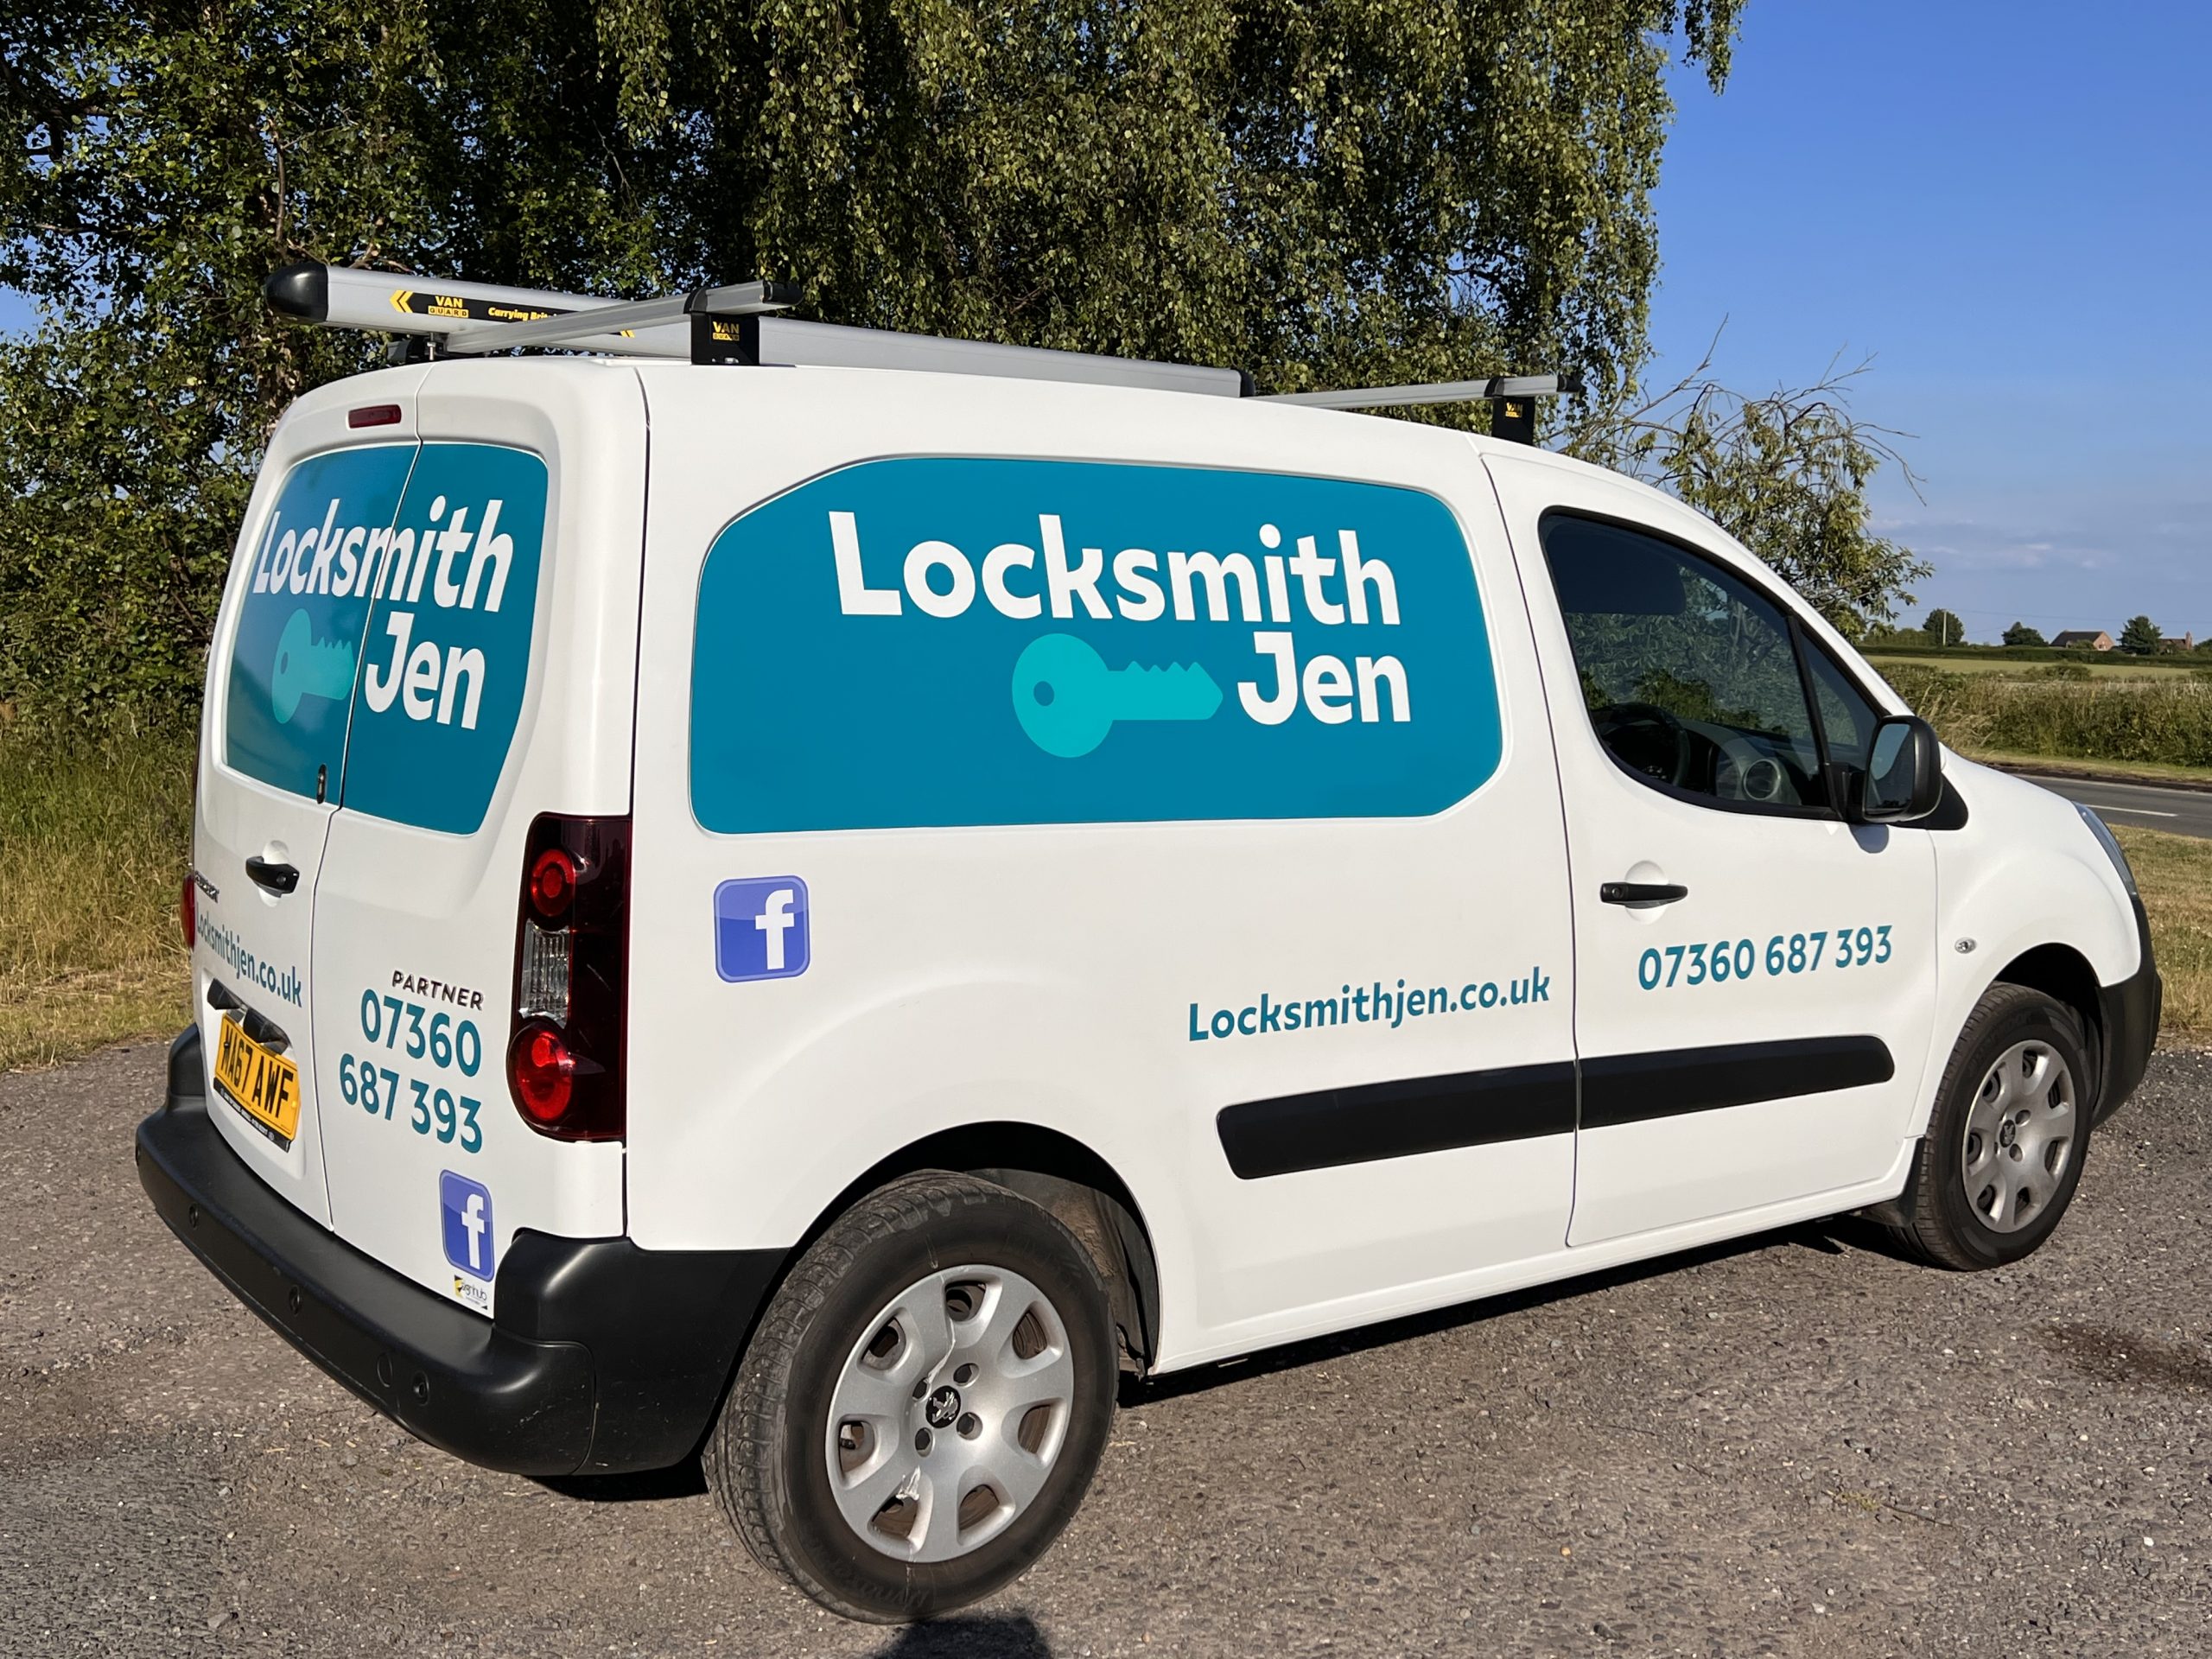 Locksmith Van in Shropshire